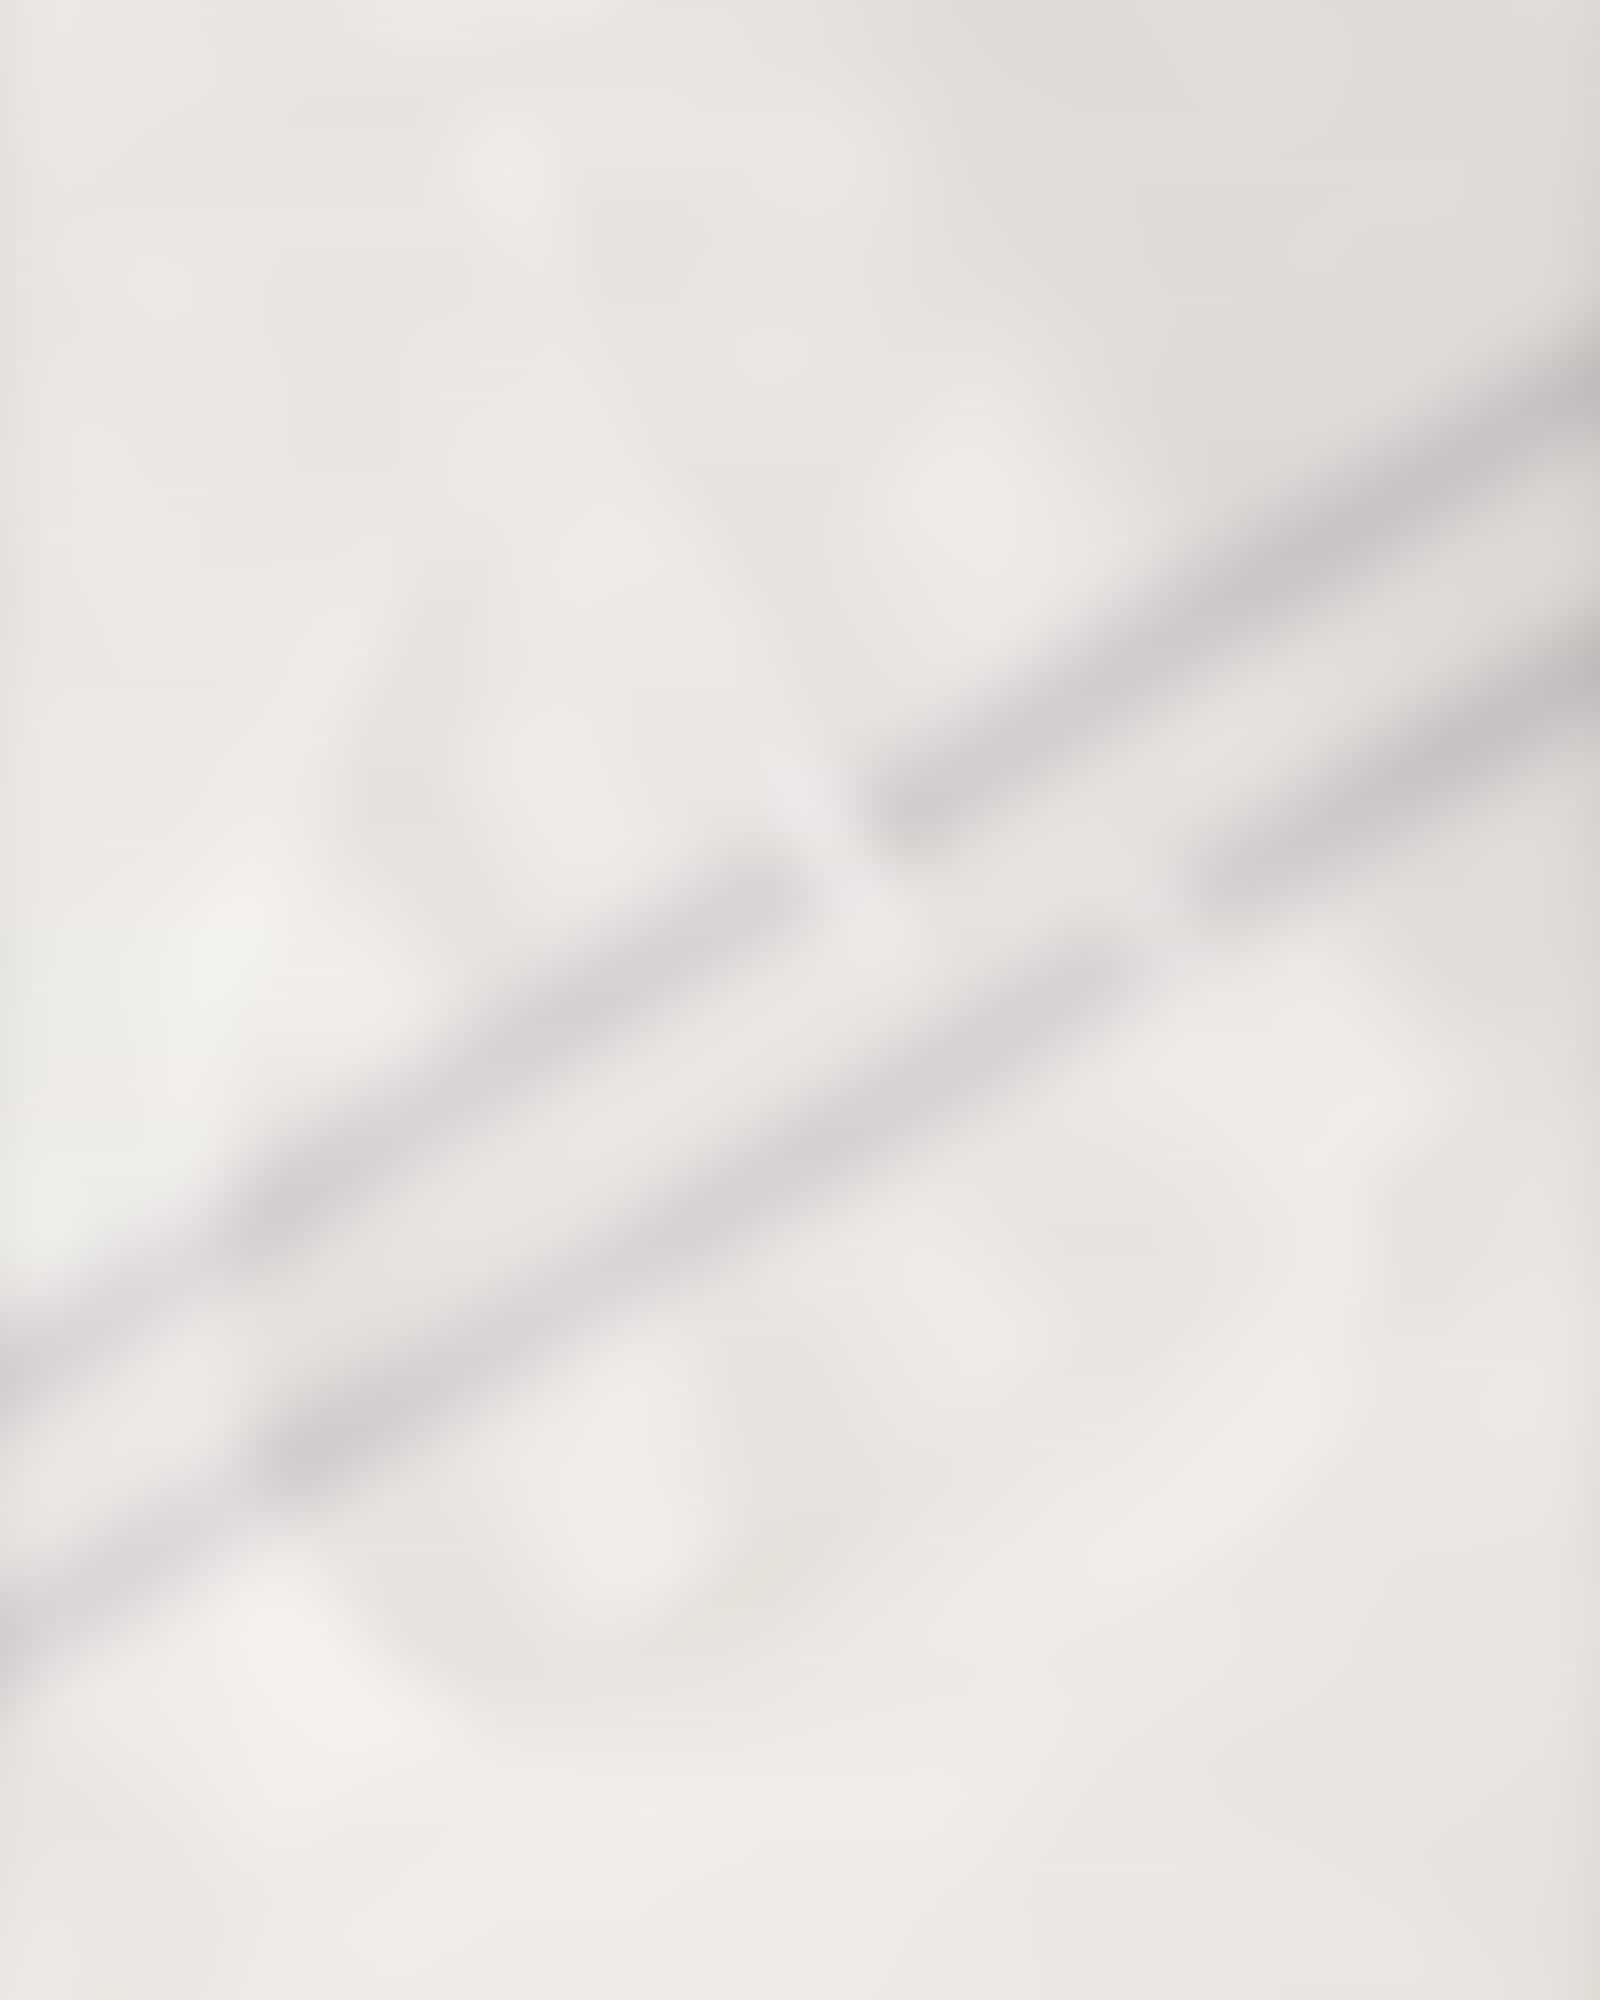 JOOP Damen Bademantel Kimono Pique 1657 - Farbe: Weiß - 600 - XS